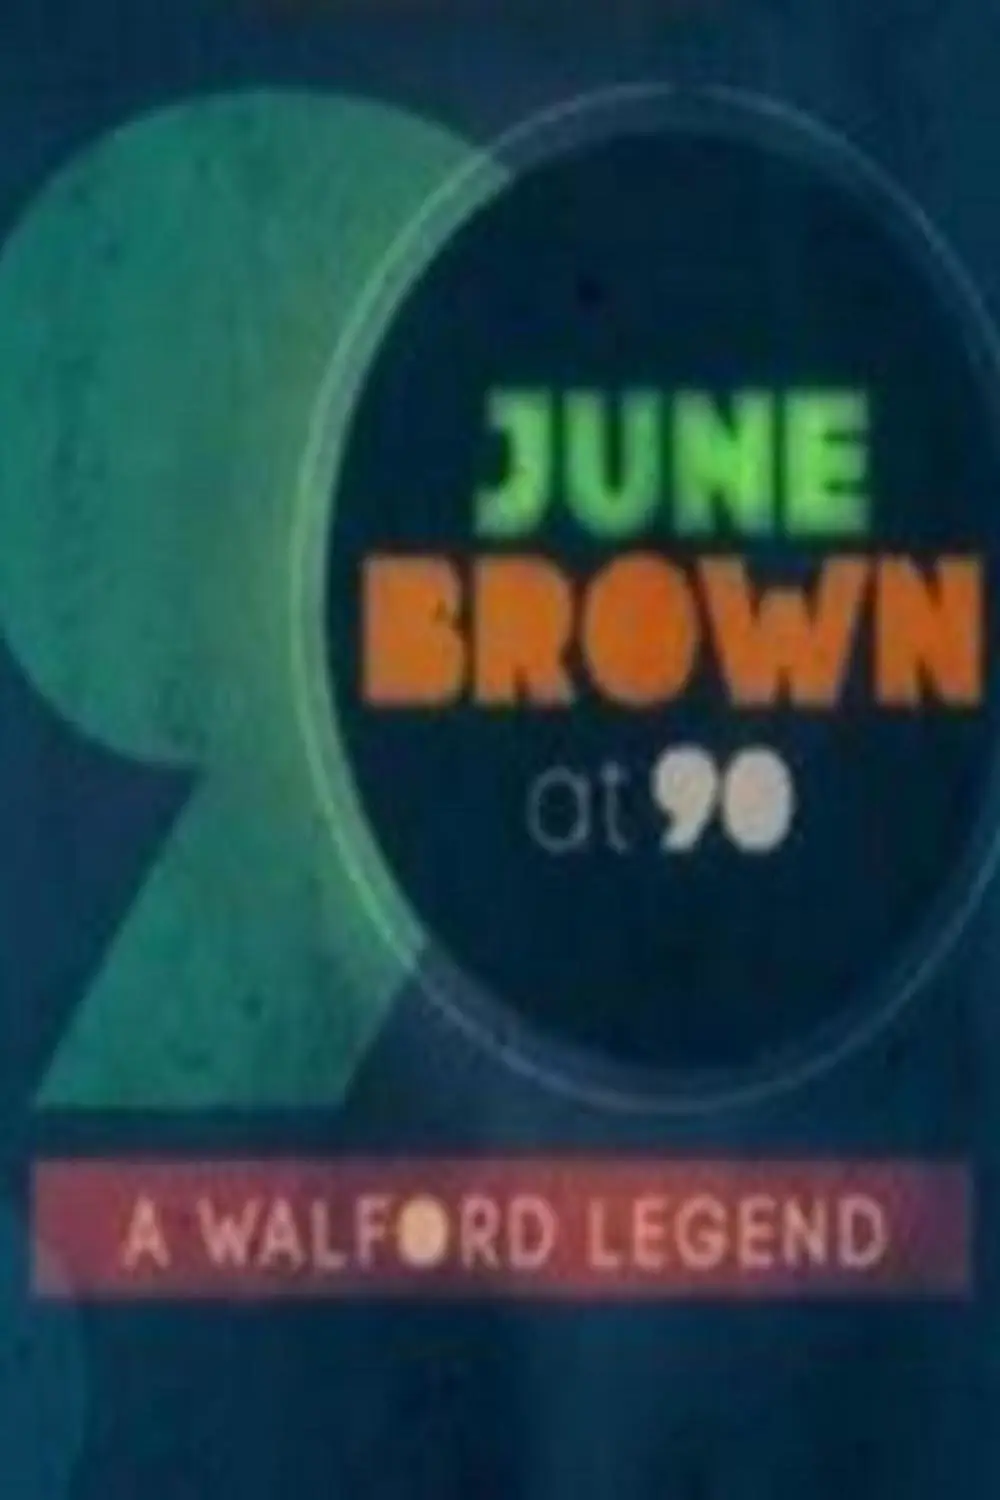 June Brown at 90: A Walford Legend_peliplat